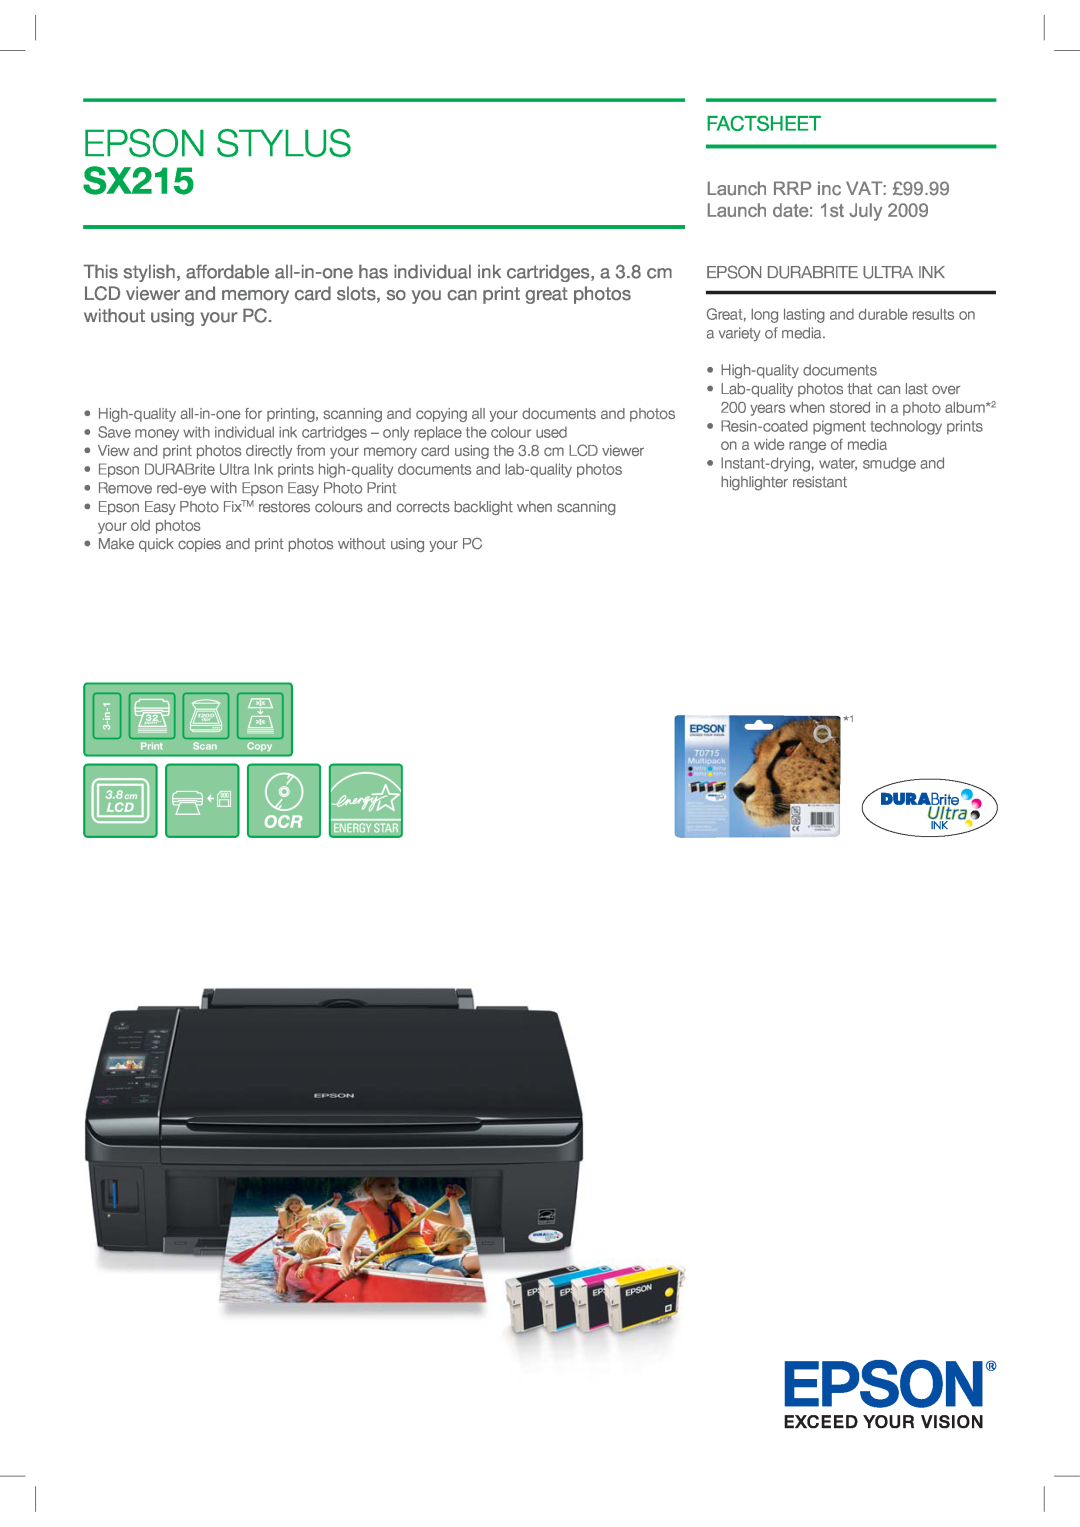 Epson manual Factsheet, Epson Durabrite Ultra Ink, EPSON STYLUS SX215, Launch RRP inc VAT £99.99 Launch date 1st July 